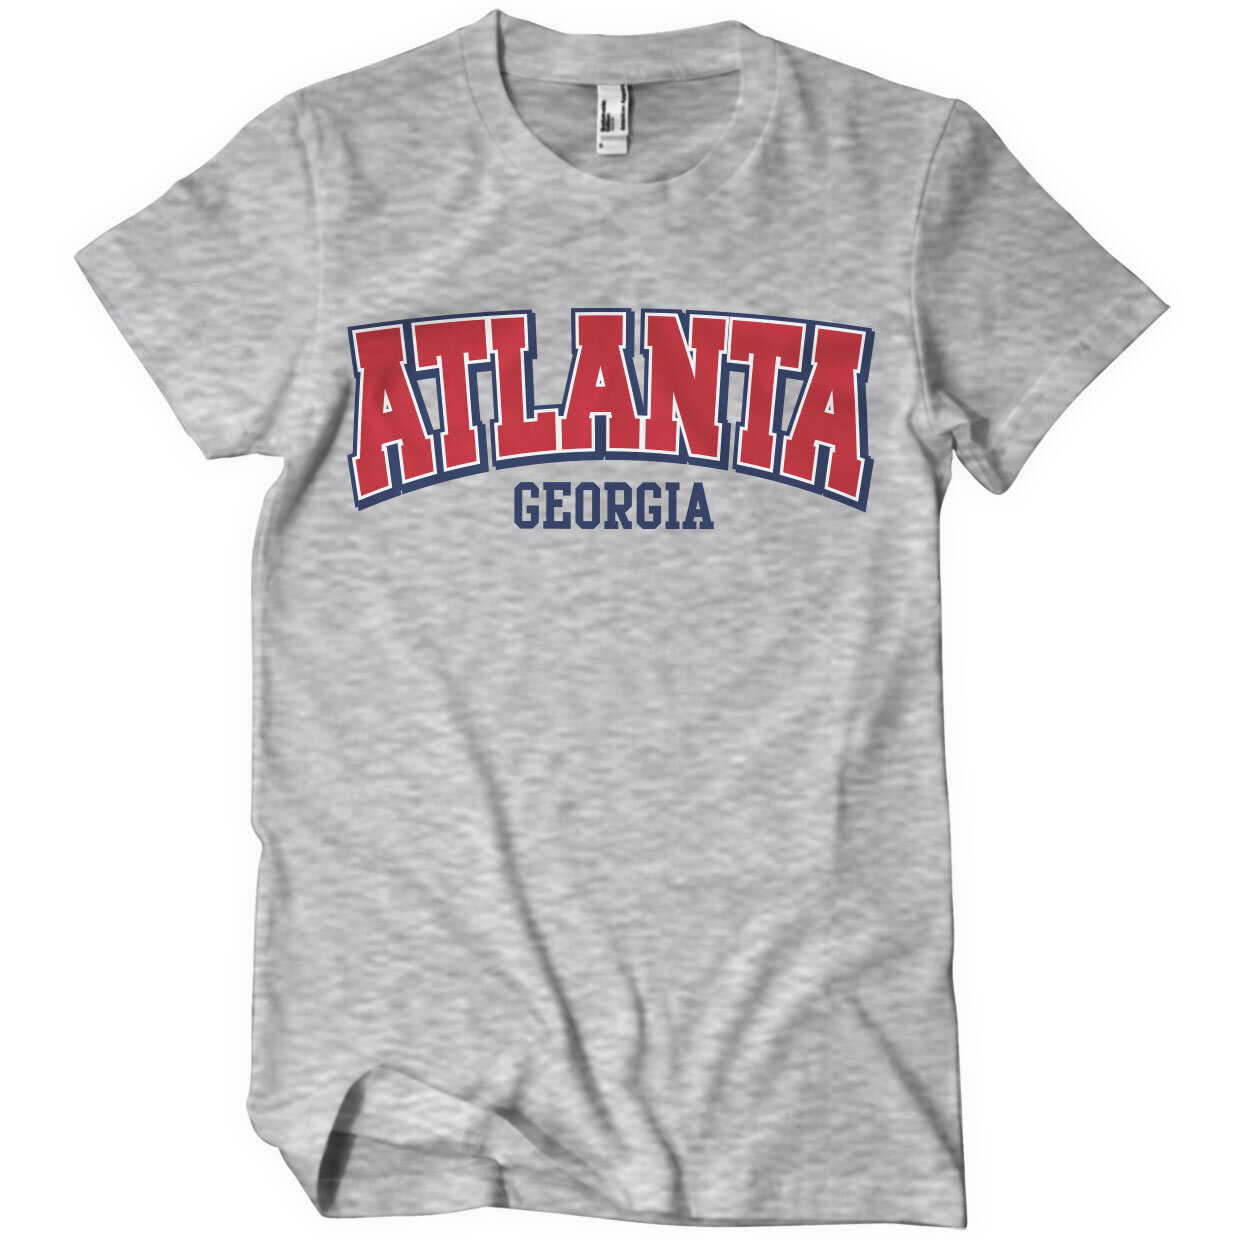 Atlanta - Georgia T-Shirt